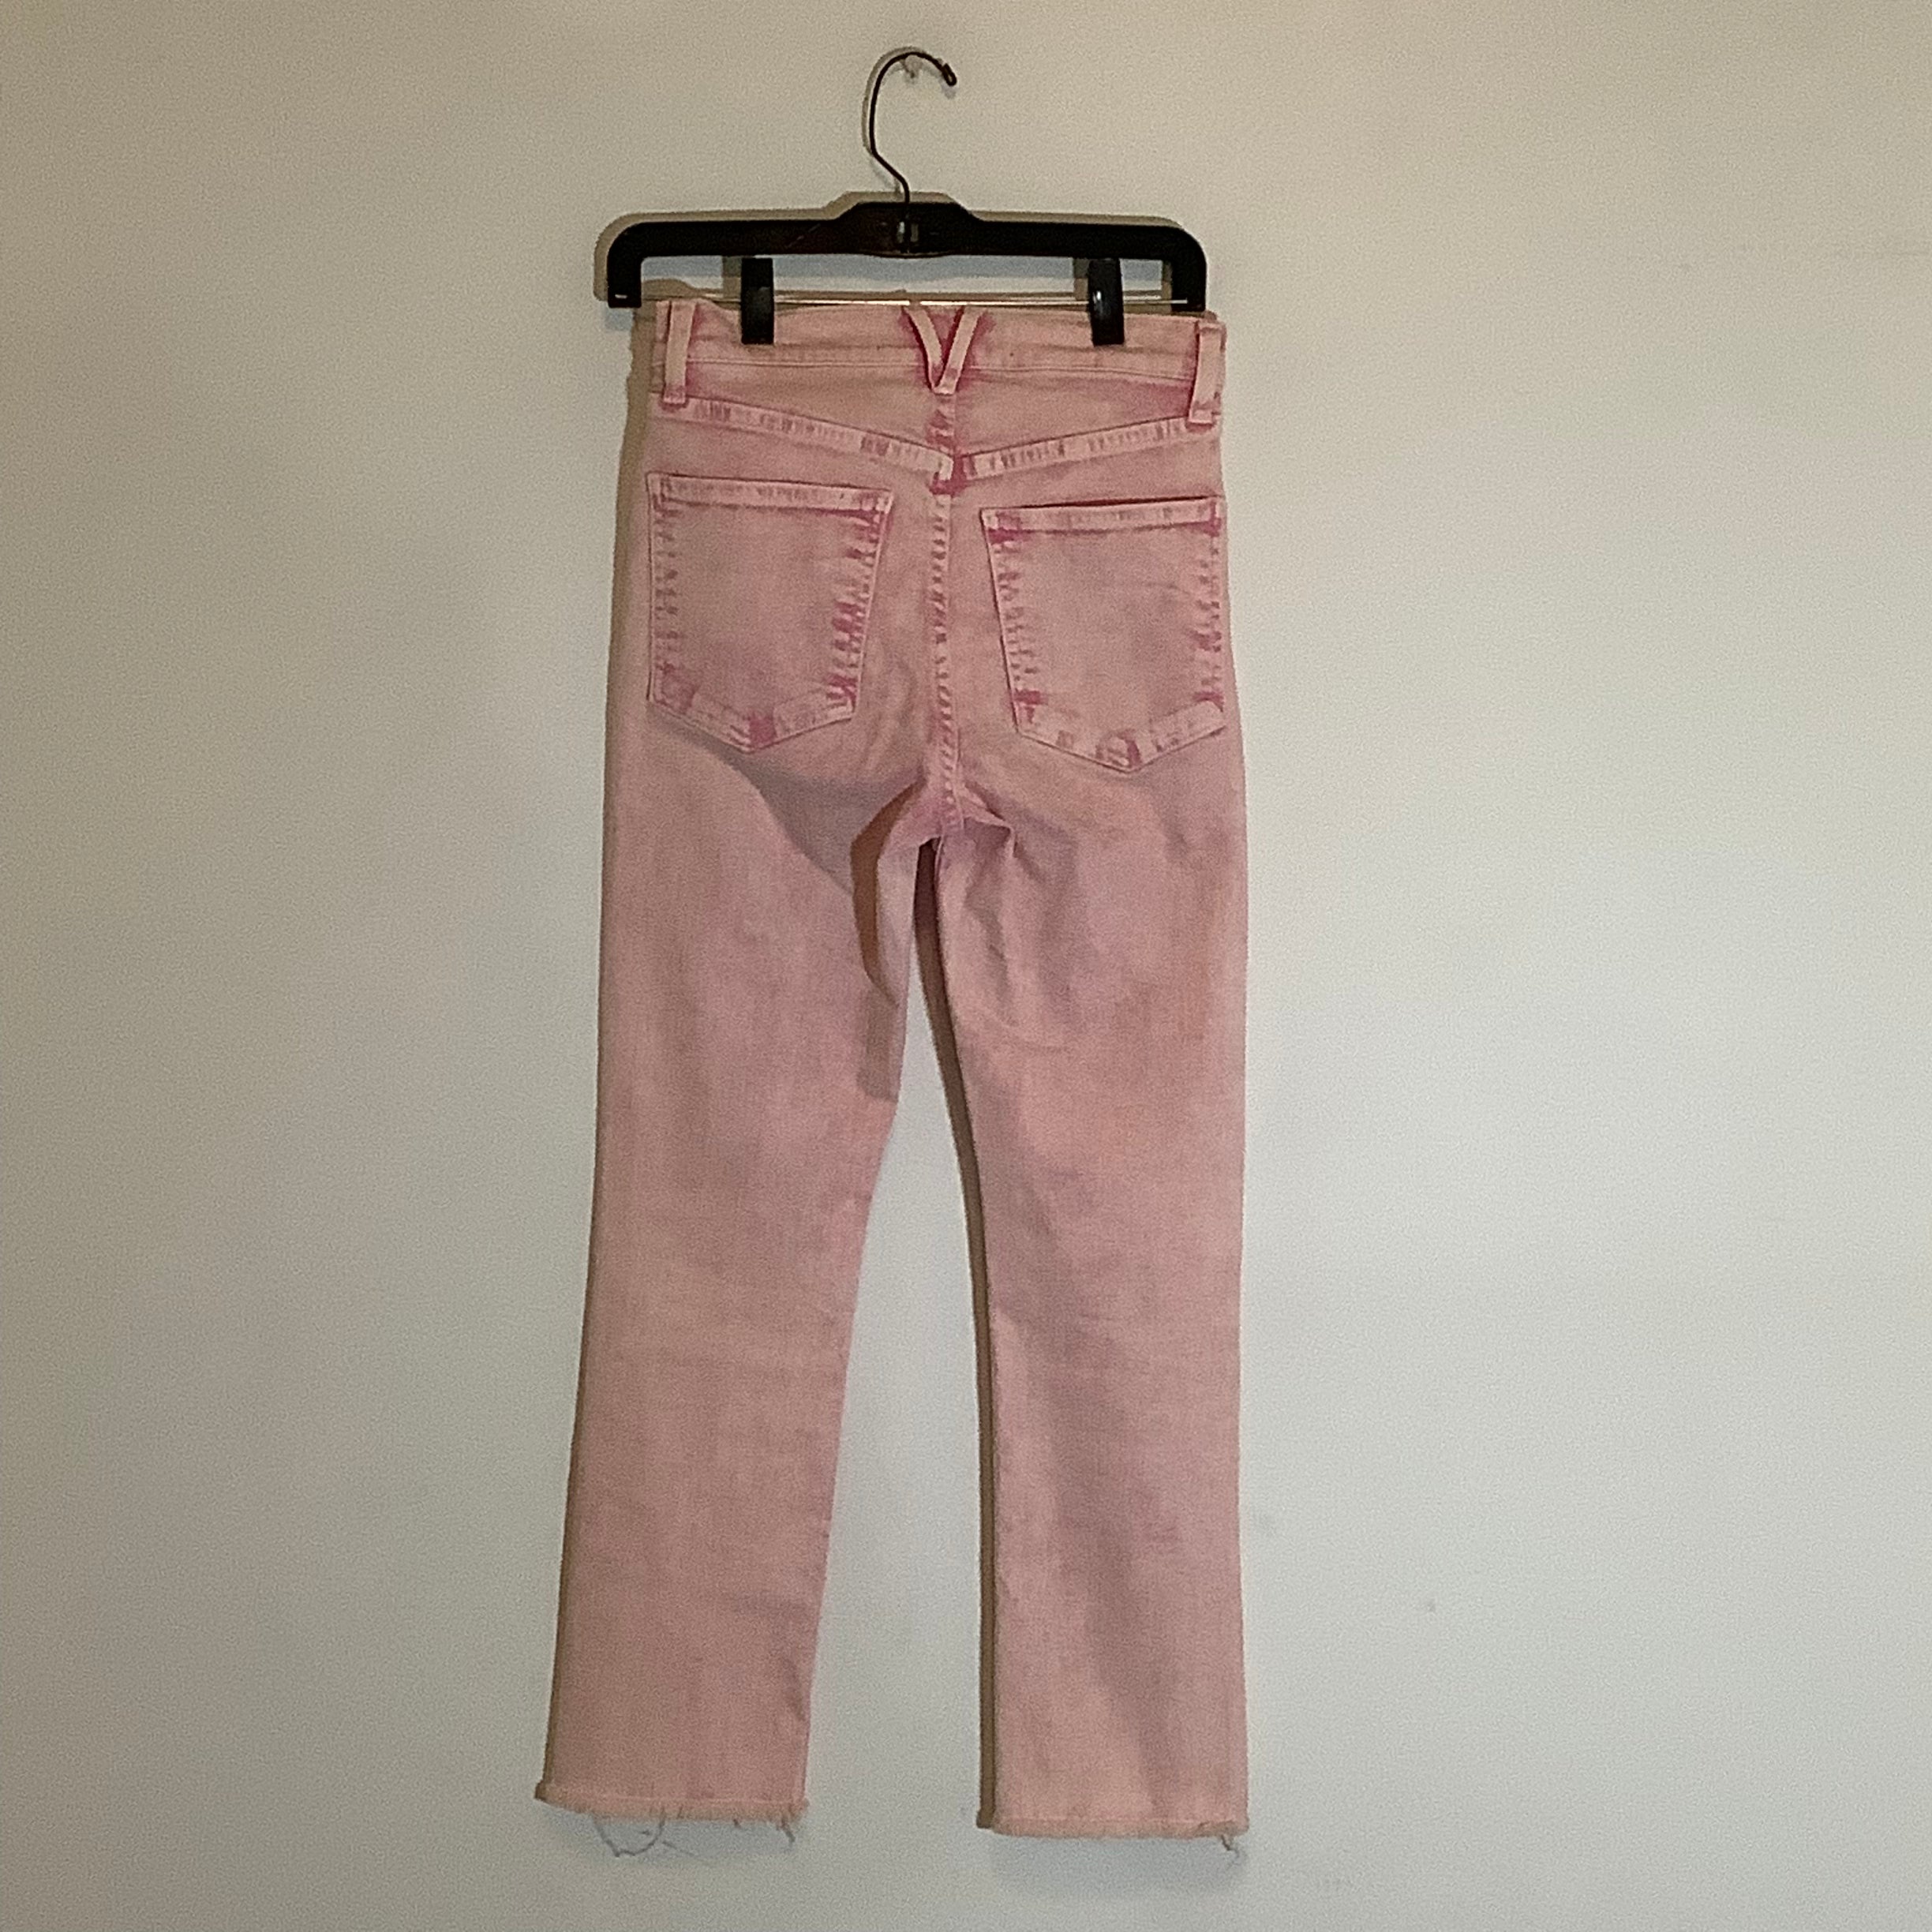 Veronica Beard Pink Jean Size 26